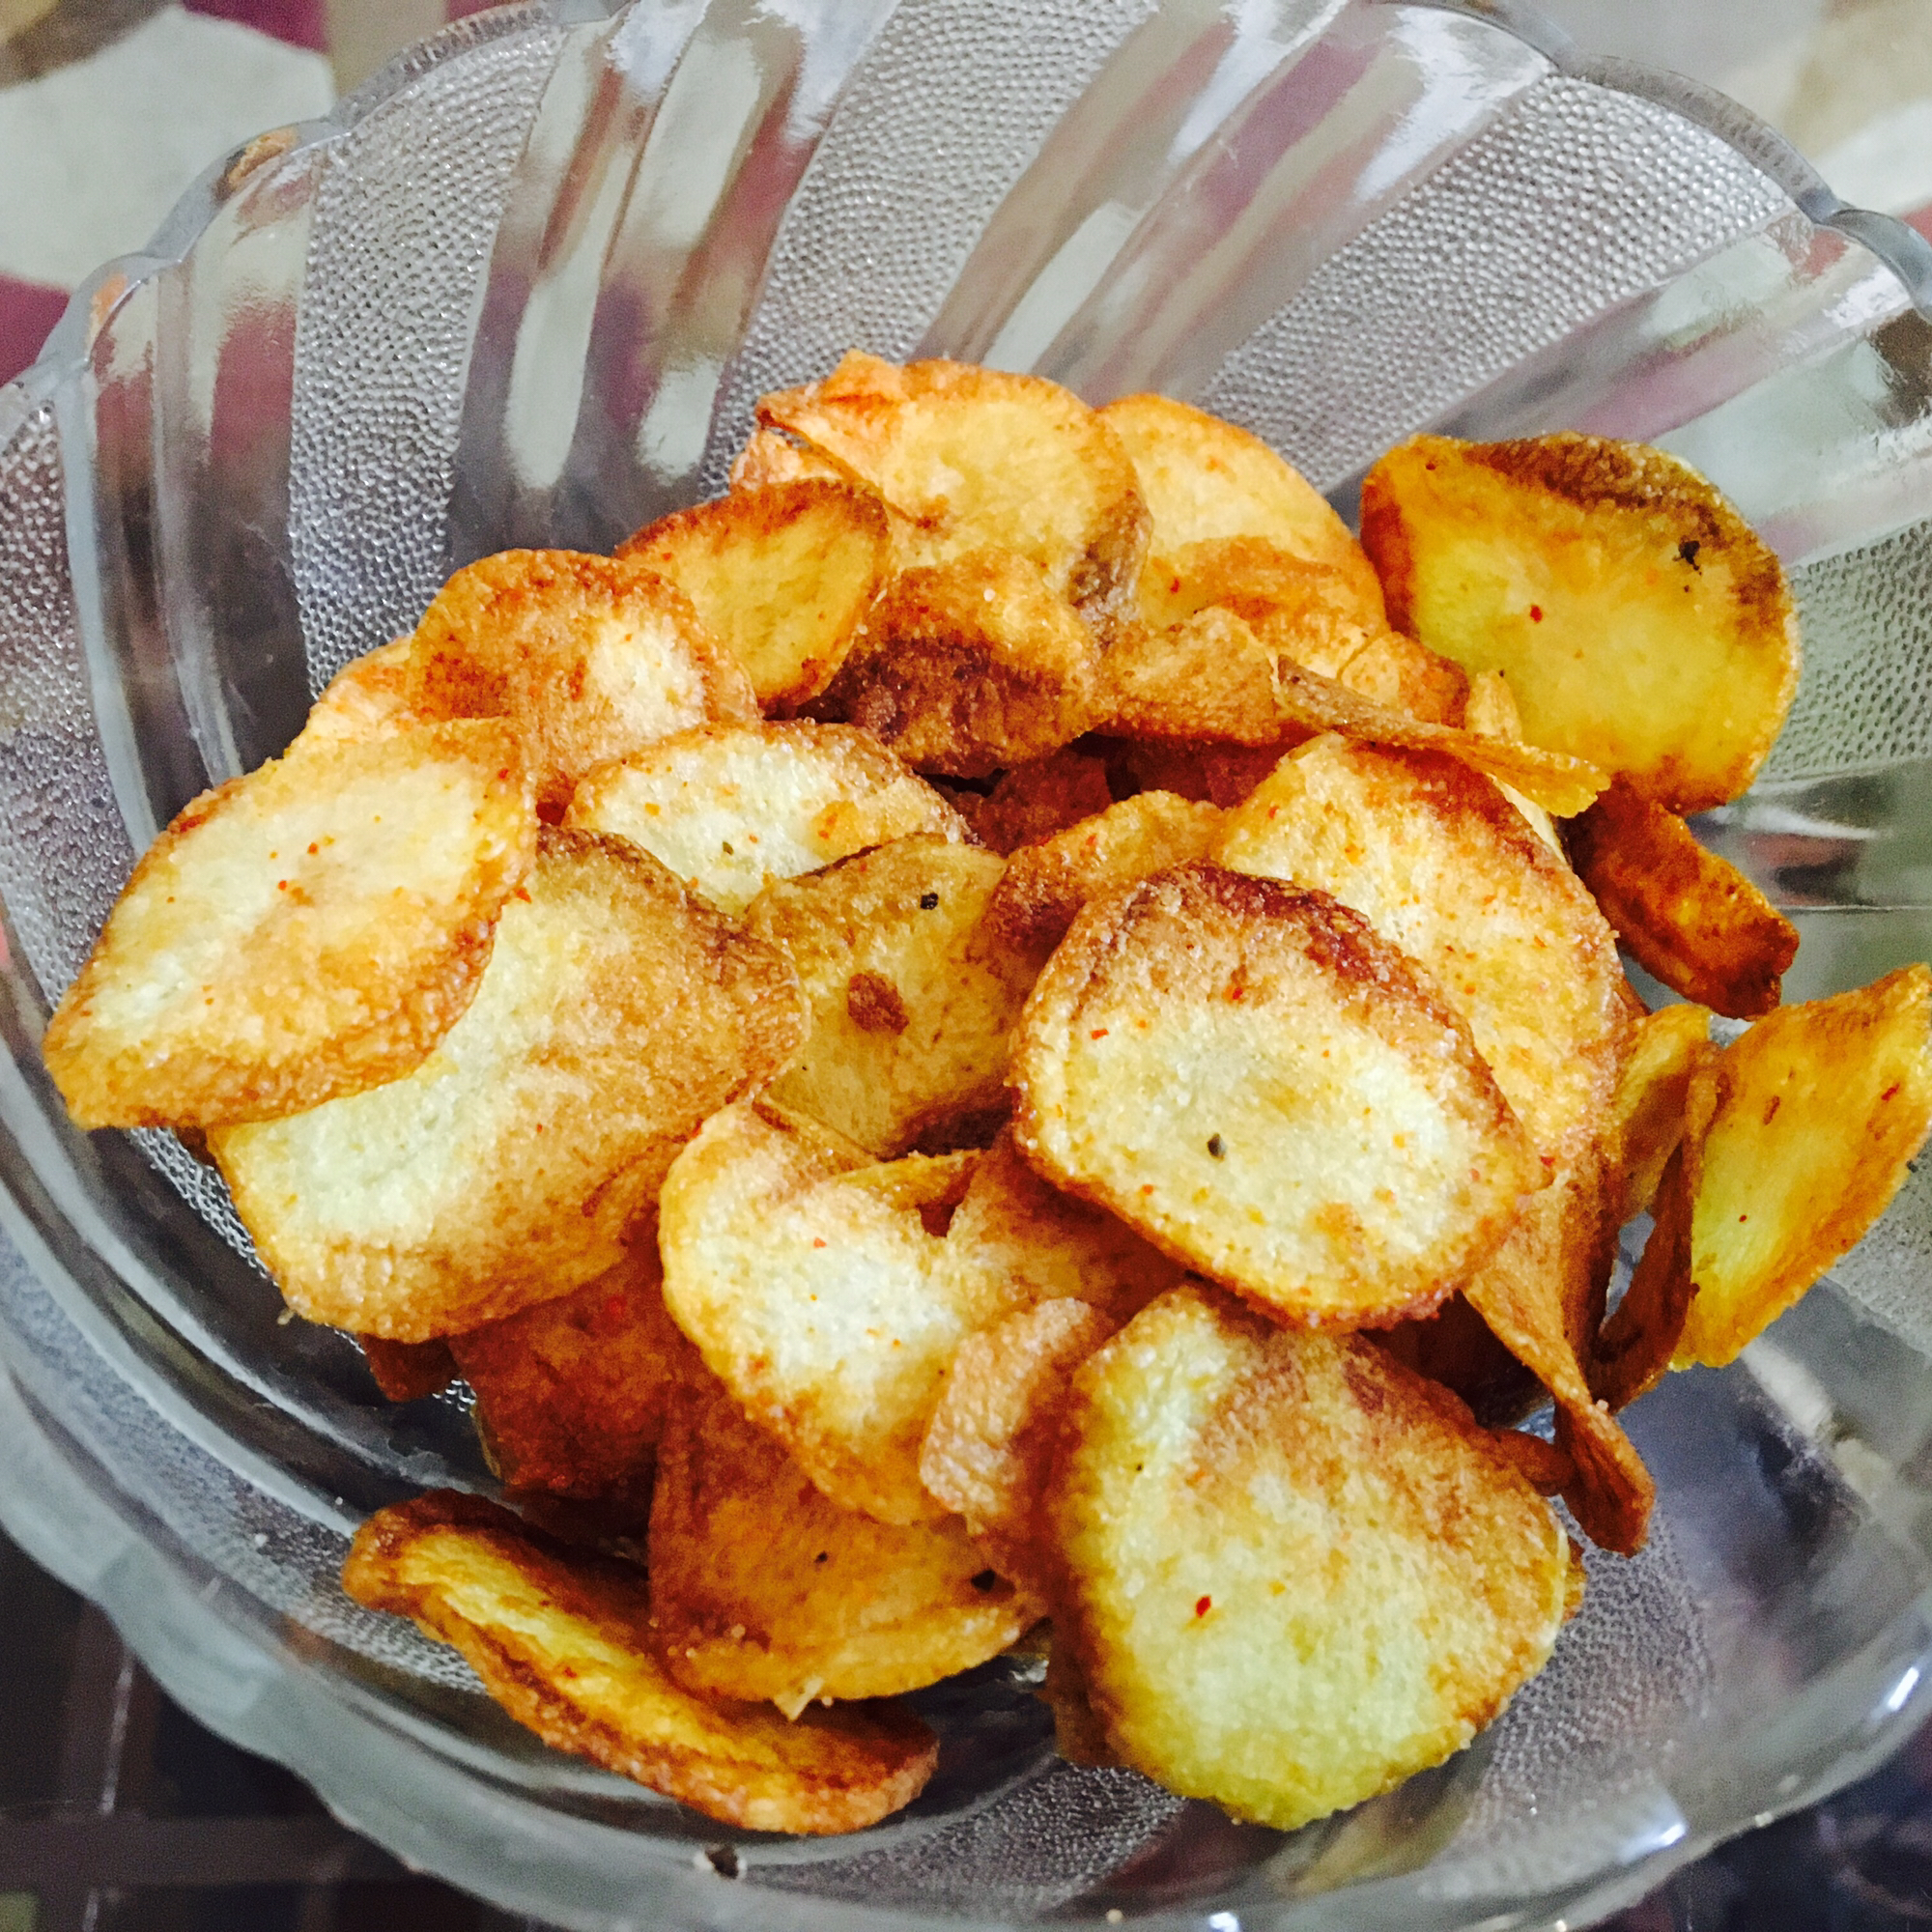 Homestyle Potato Chips